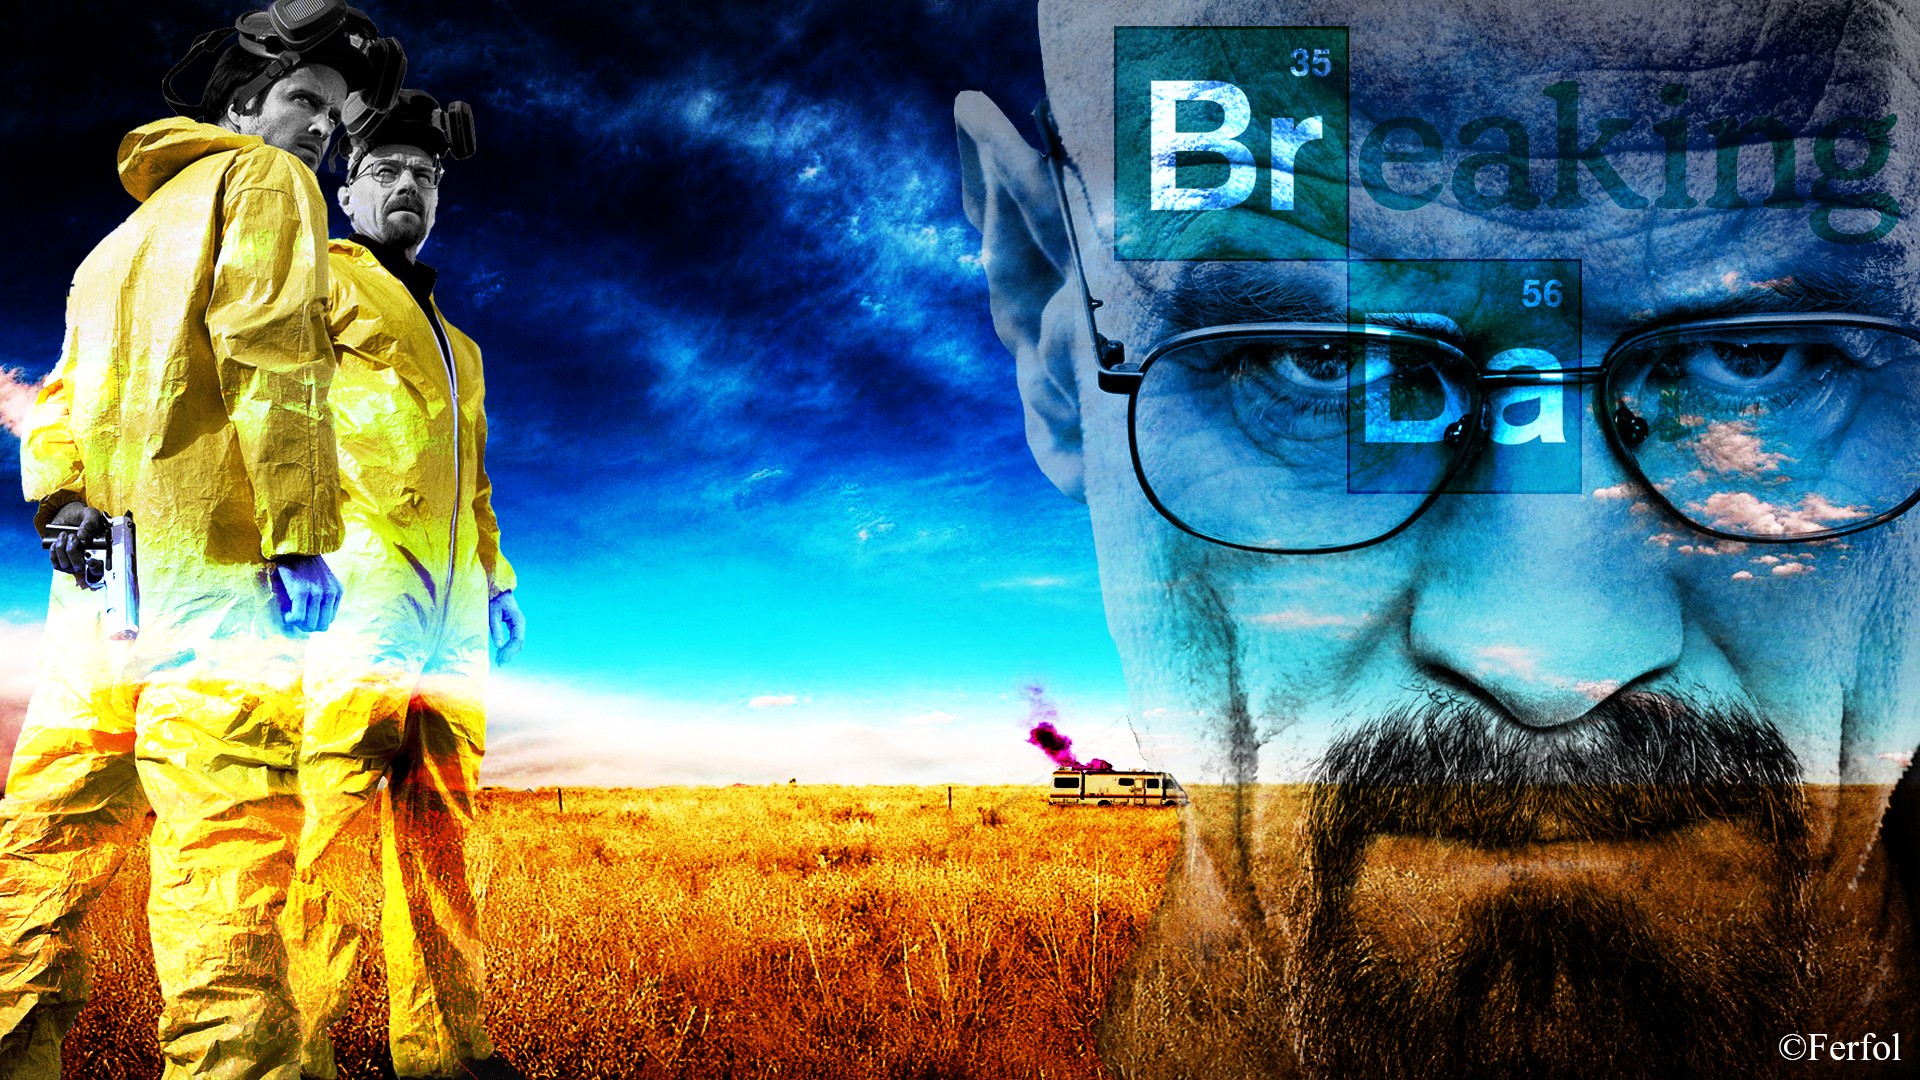 Breaking Bad AMC Walter White Heisenberg Jesse Pinkman TV Actor Bryan Cranston Aaron Paul 1920x1080